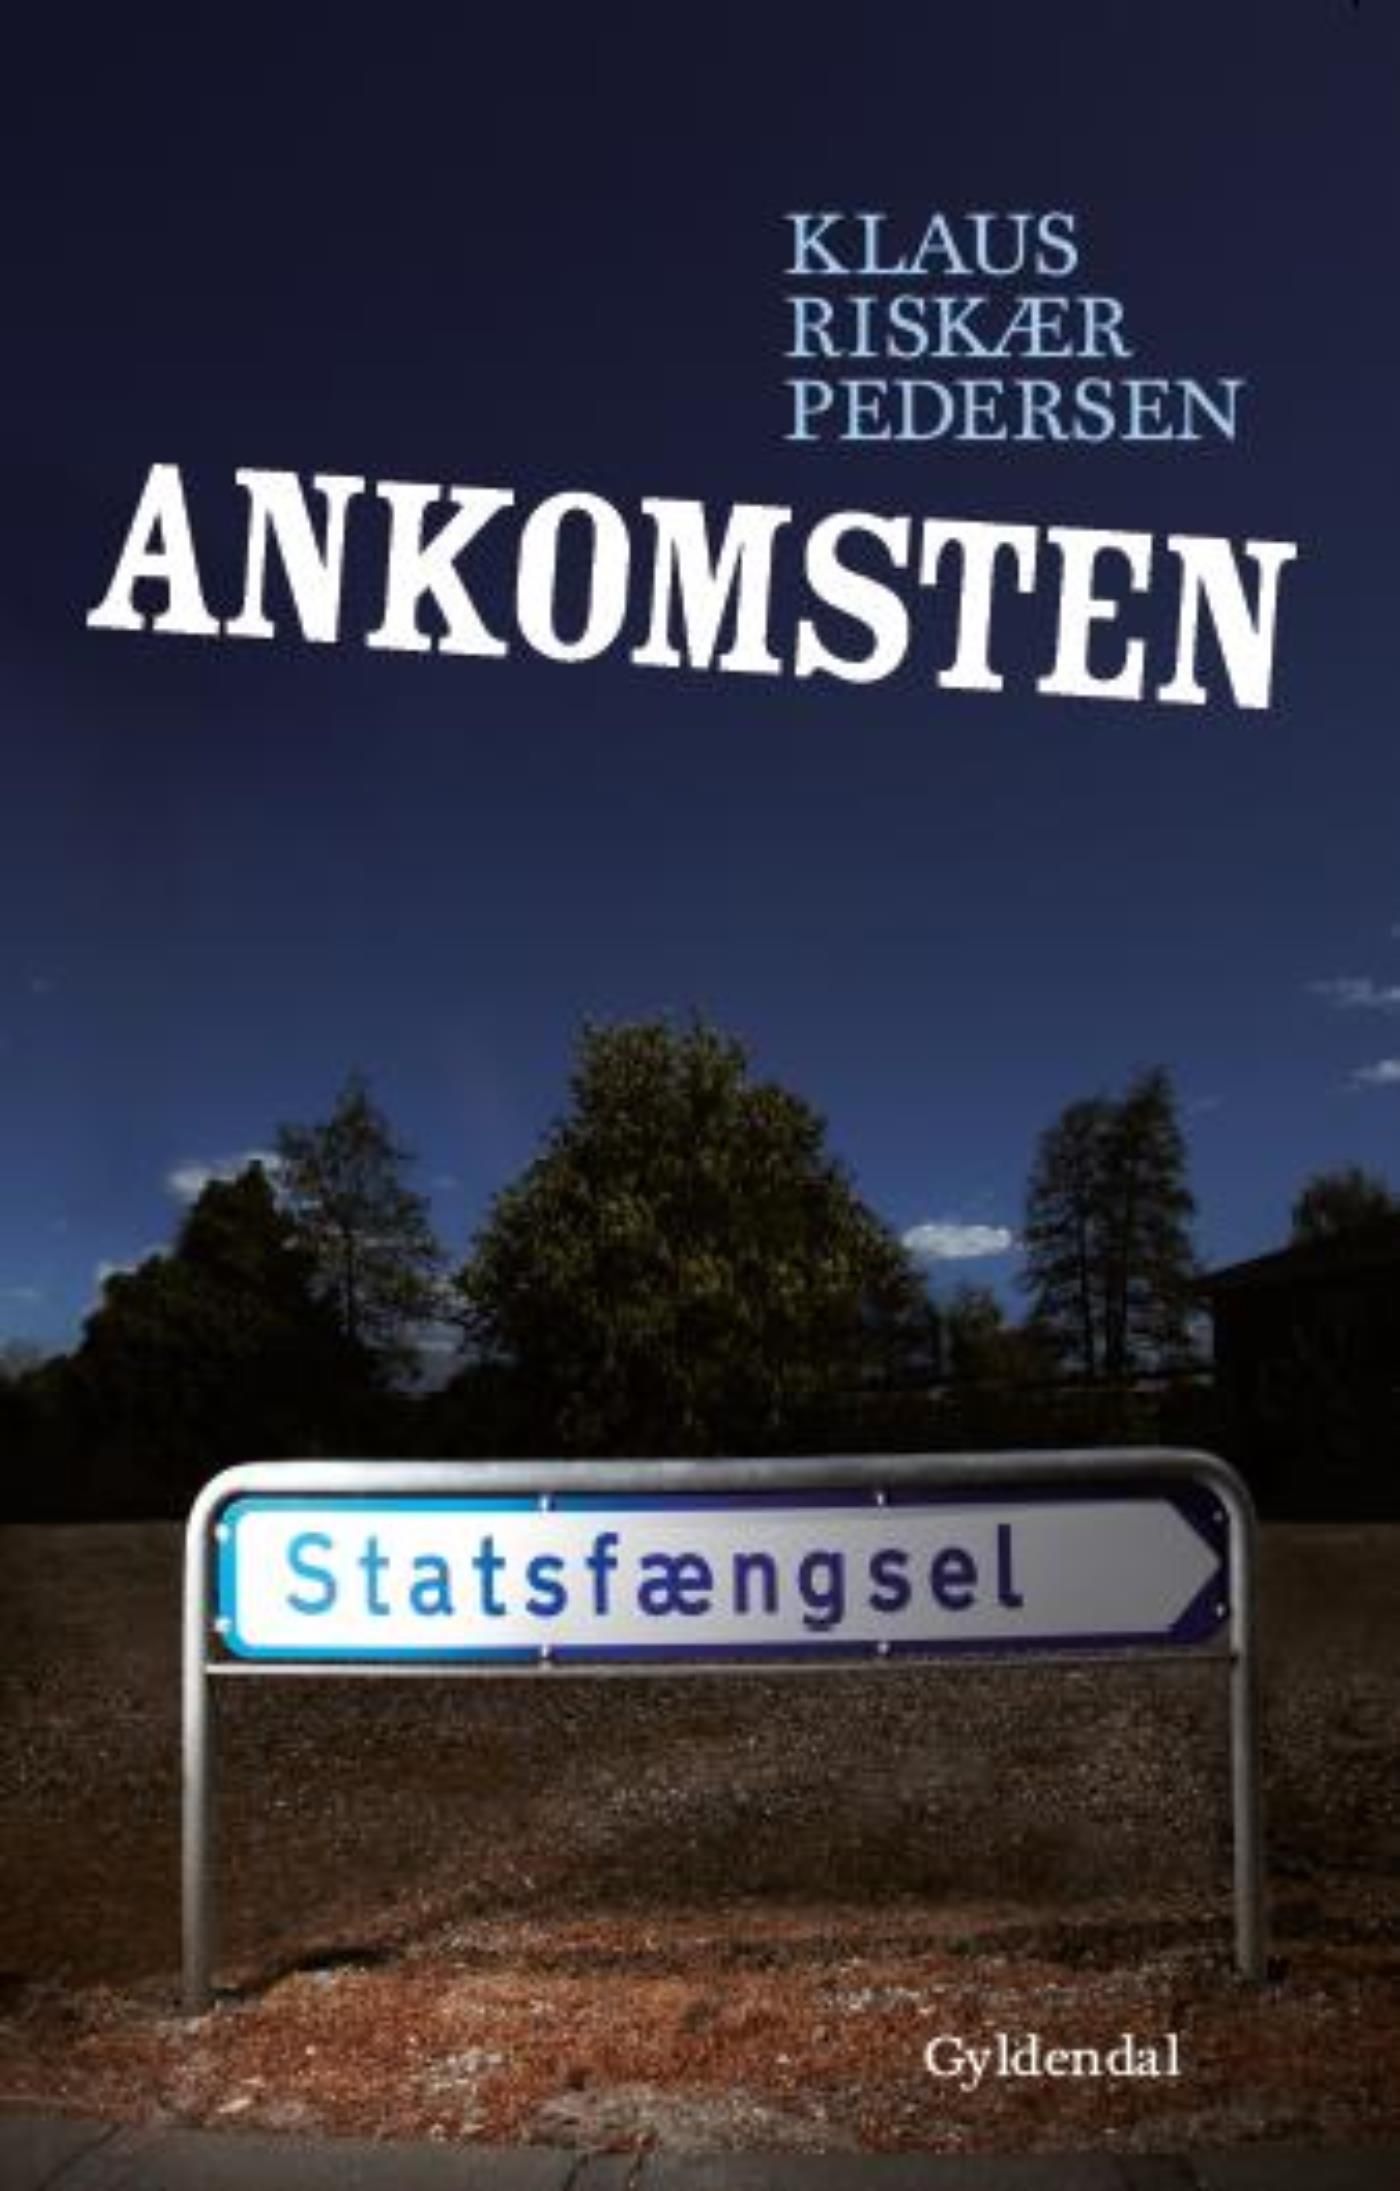 Ankomsten, eBook by Klaus Riskær Pedersen